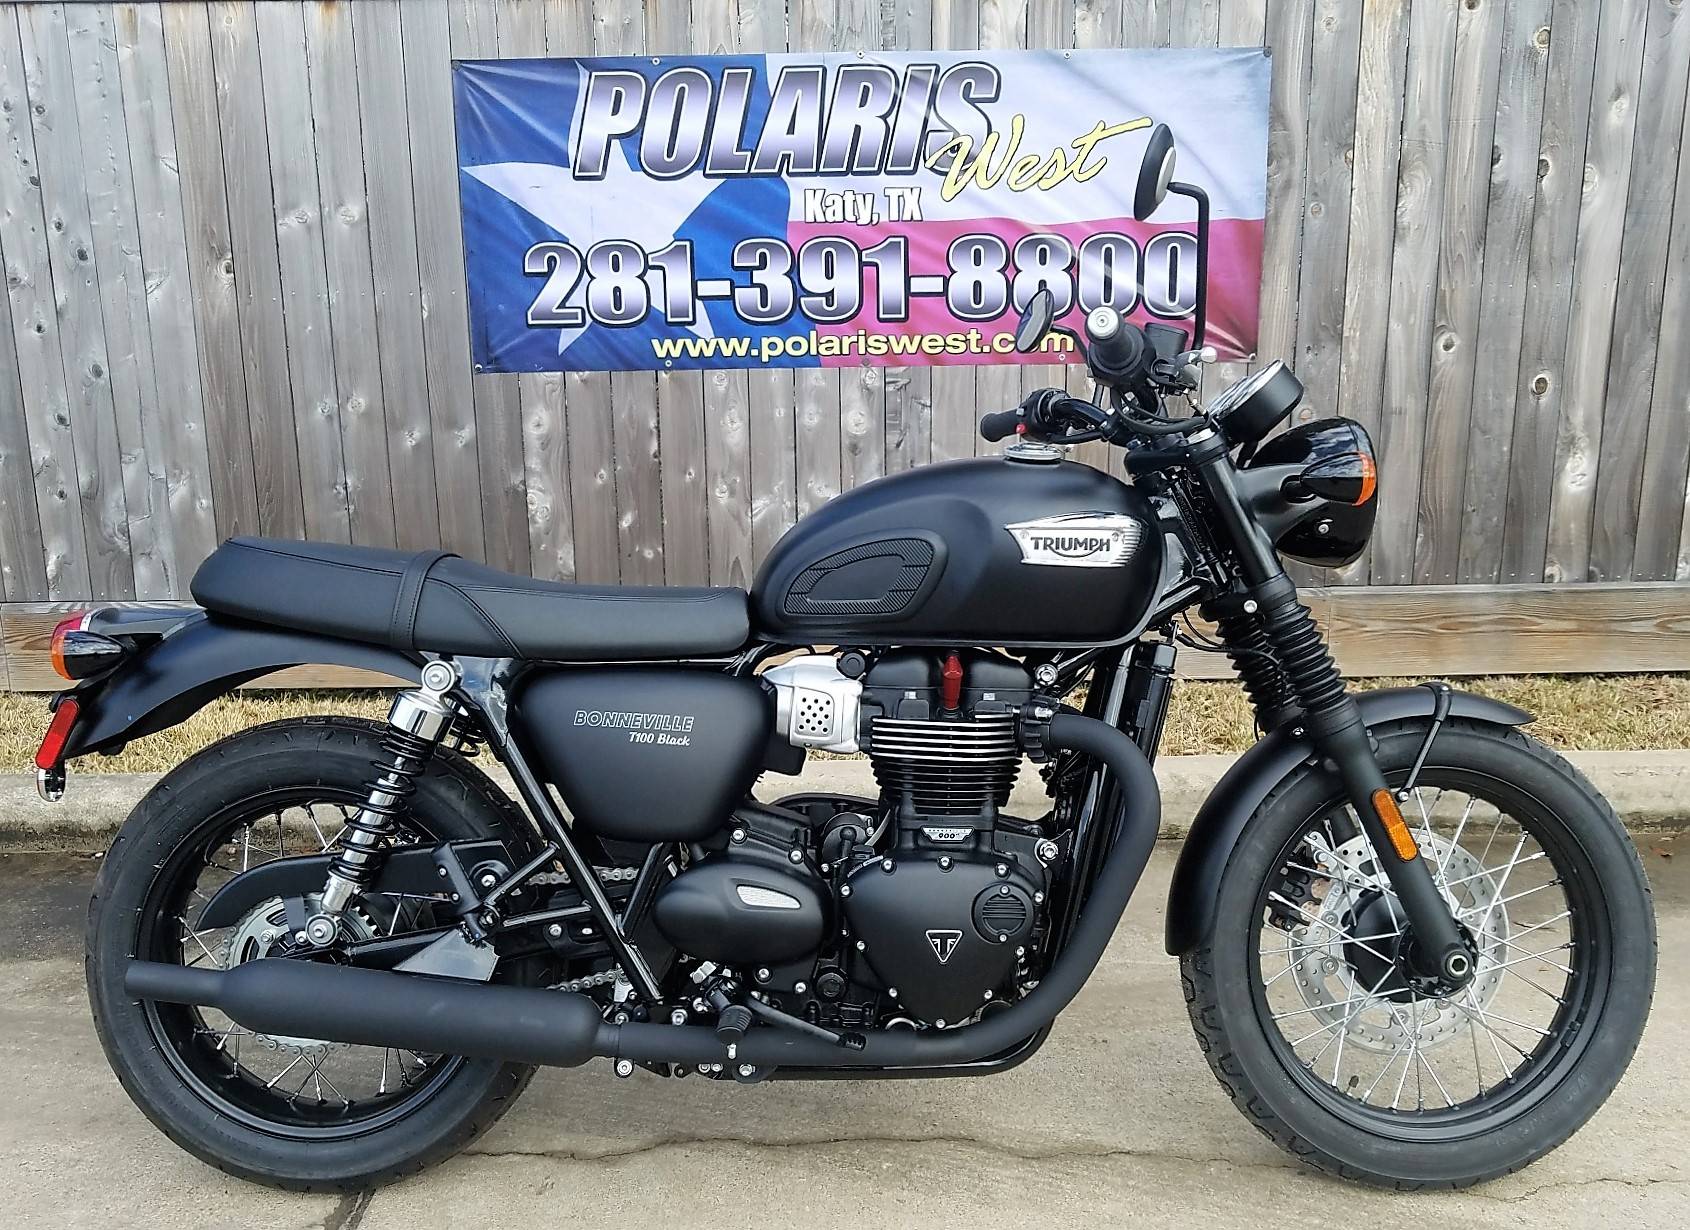 New 2019 Triumph Bonneville T100 Black Motorcycles in Katy, TX | Stock ...